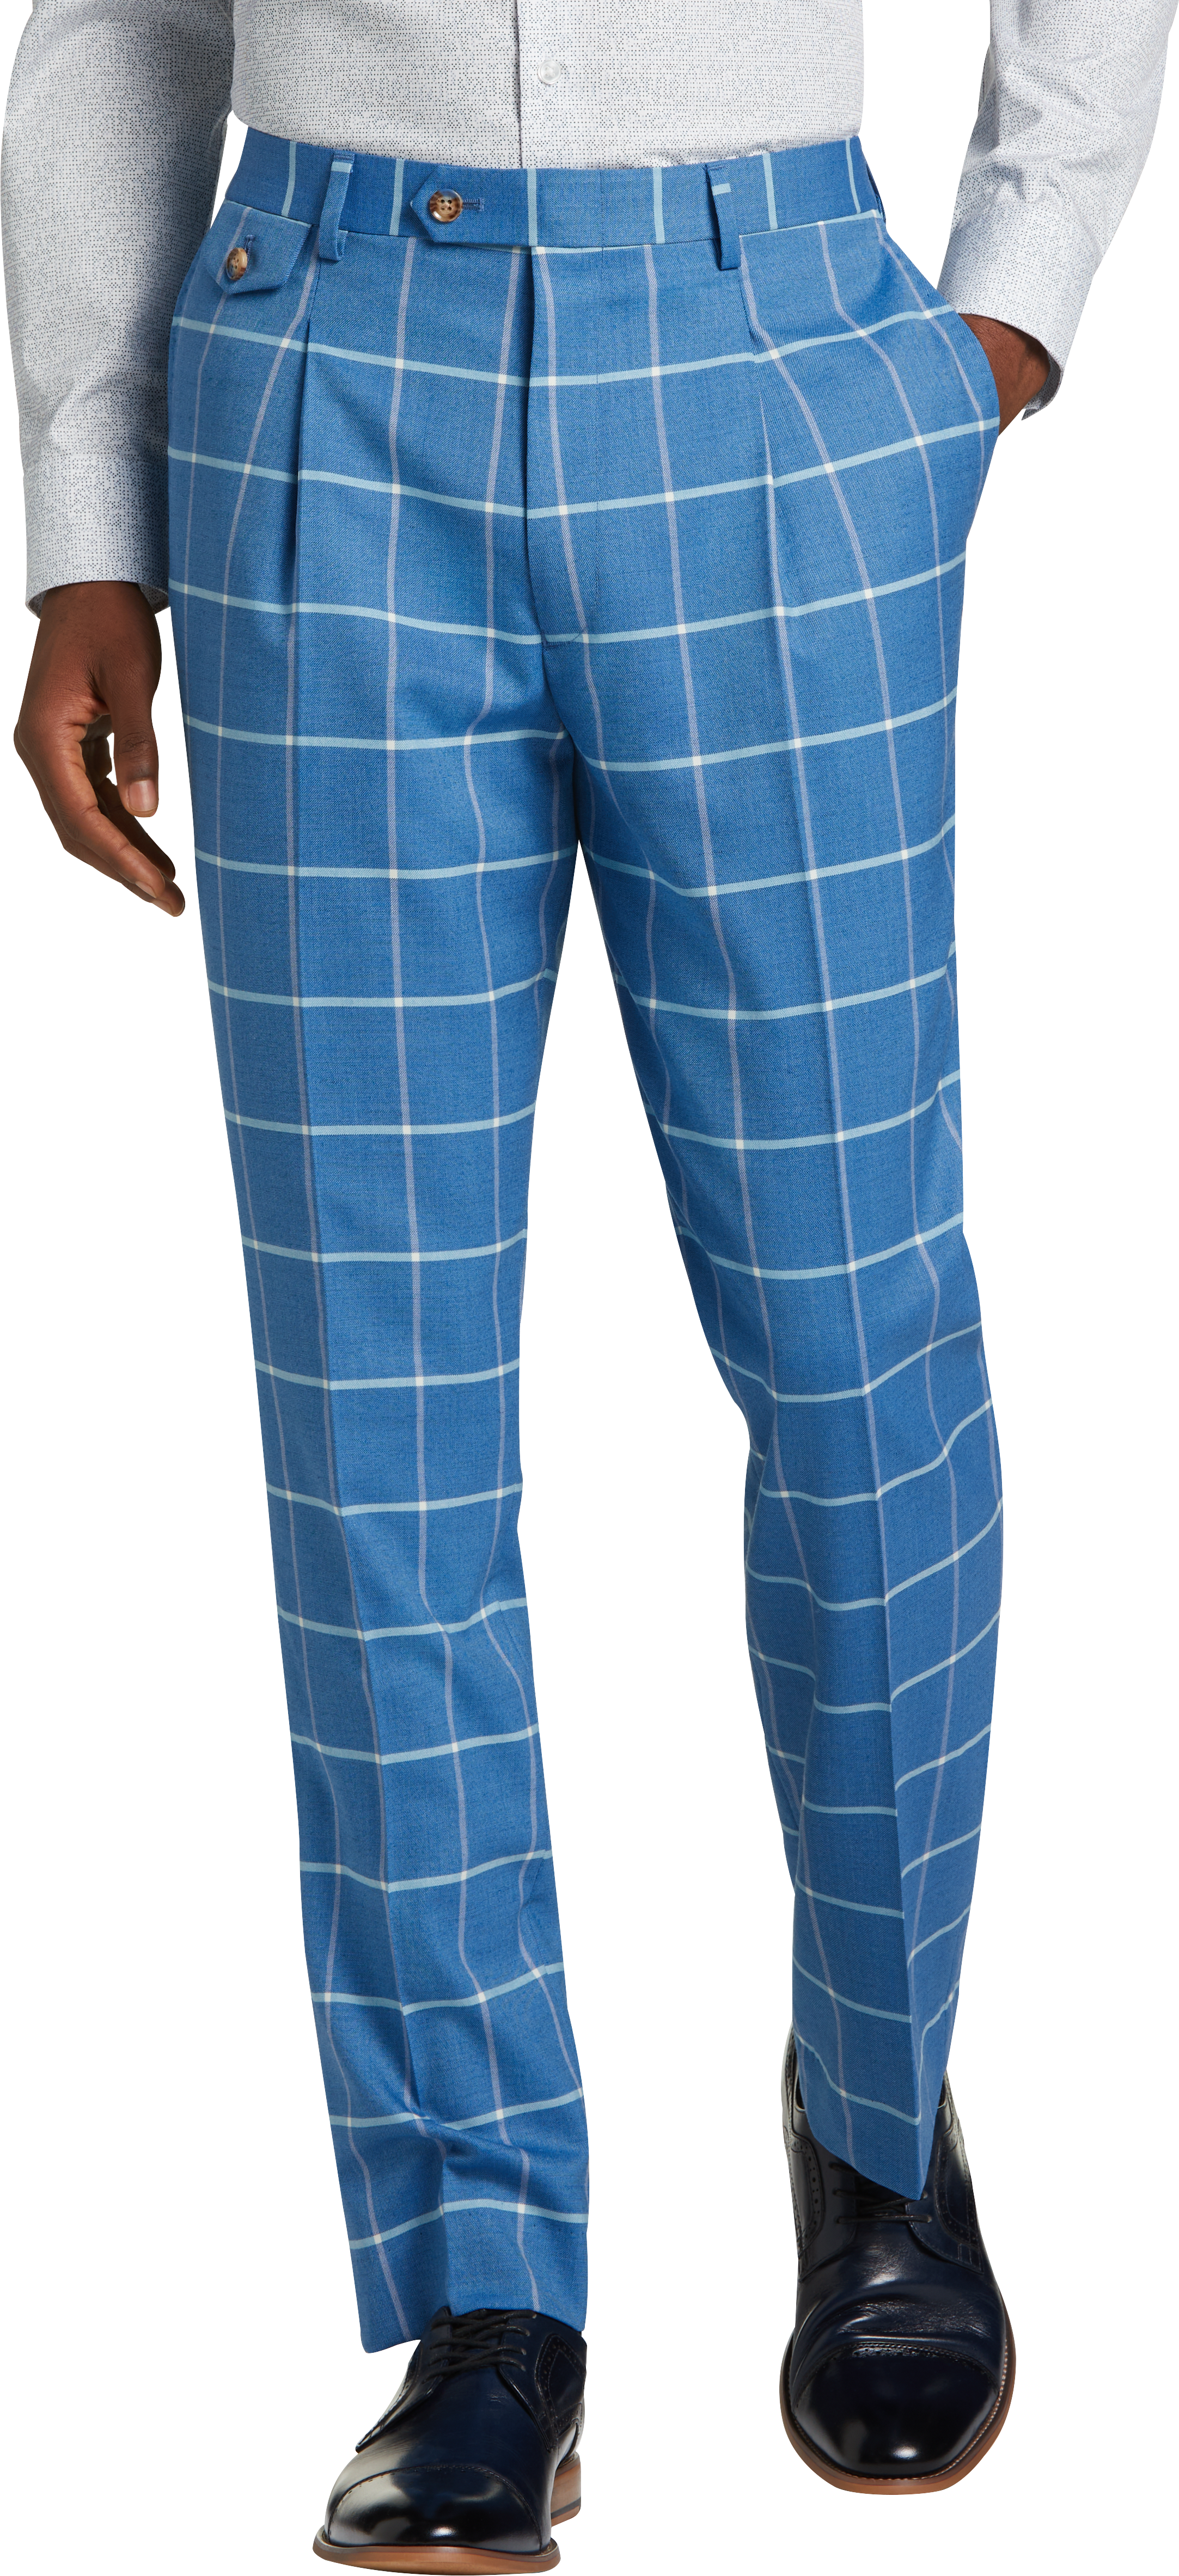 Aerie Pajama Sleep Pants Blue Green Plaid M Bright Green Stripes